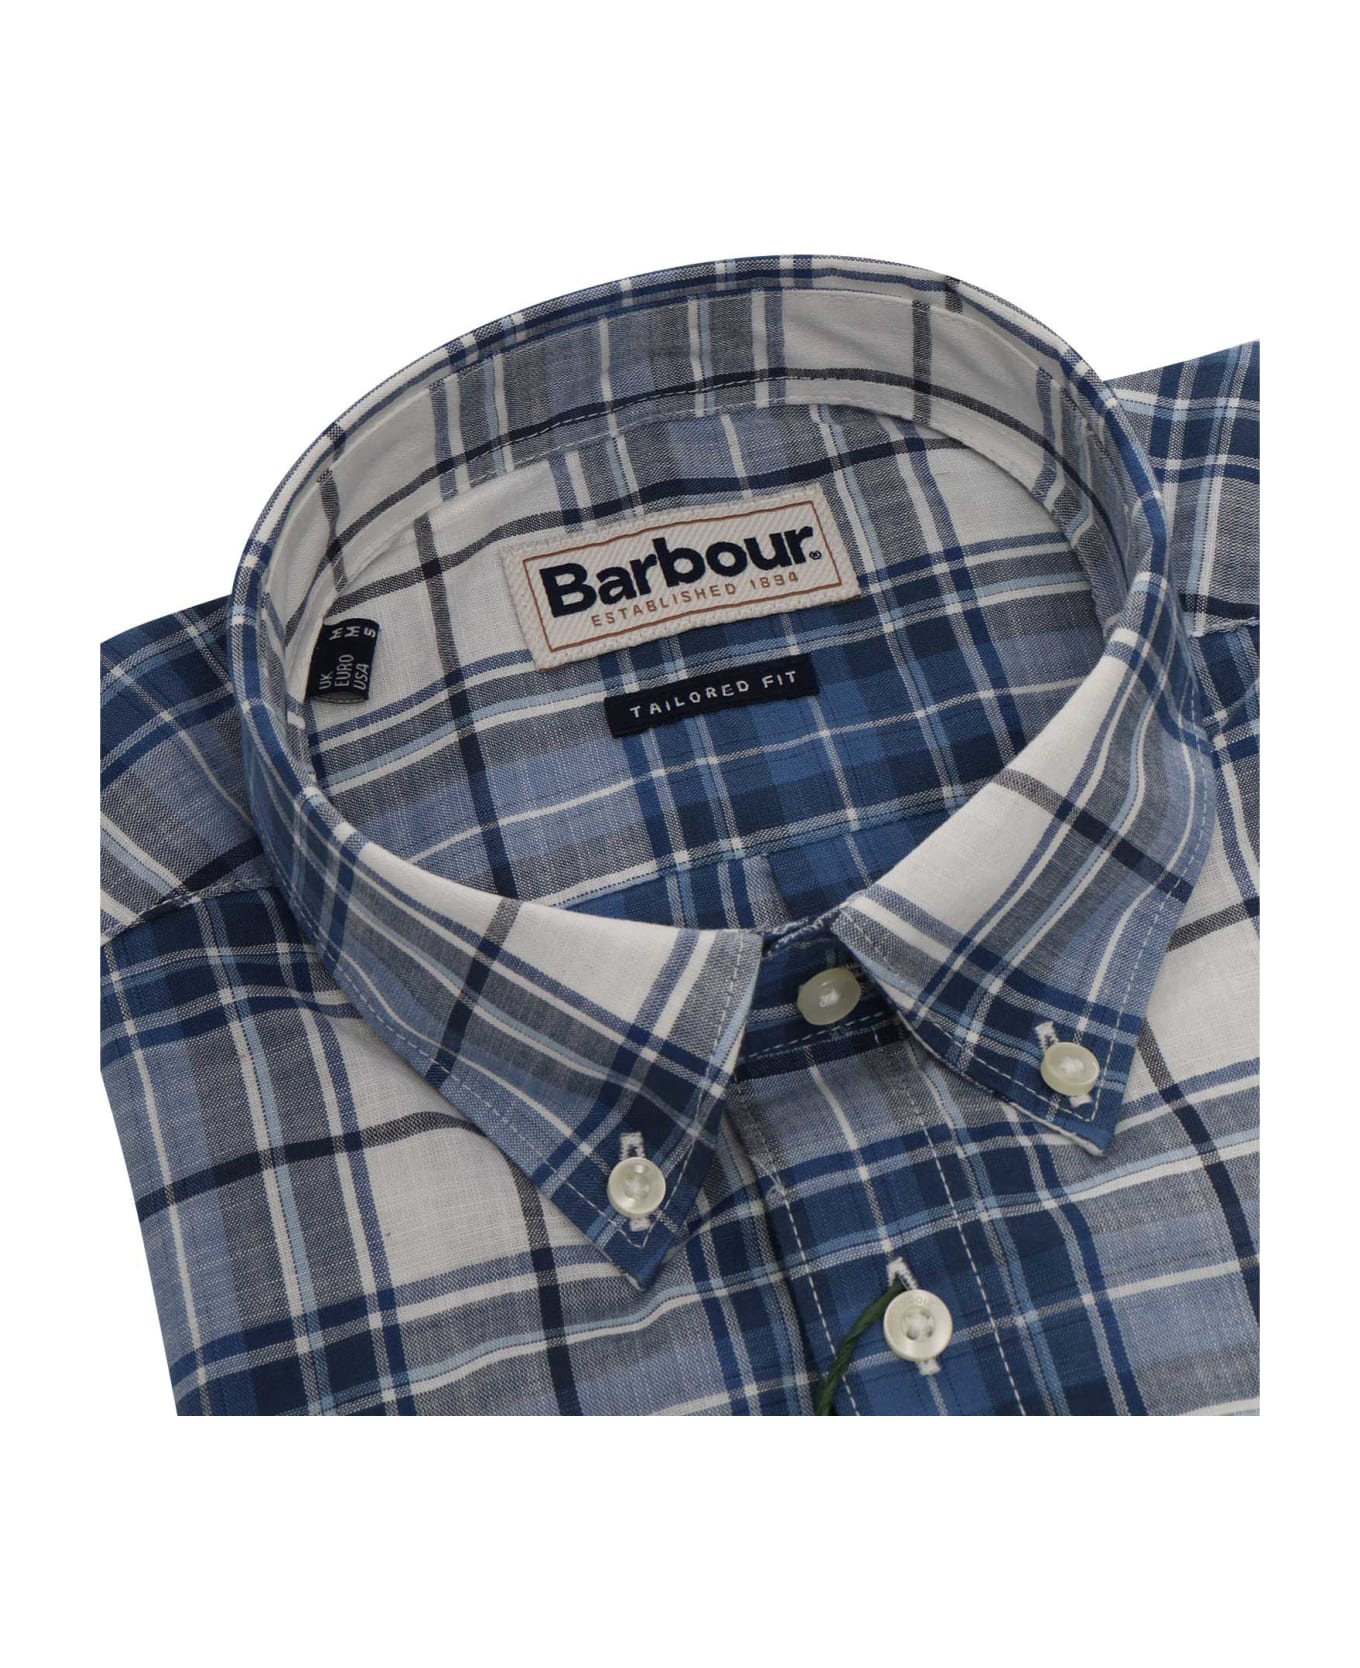 Barbour Blakelow Tartan Shirt - BLUE